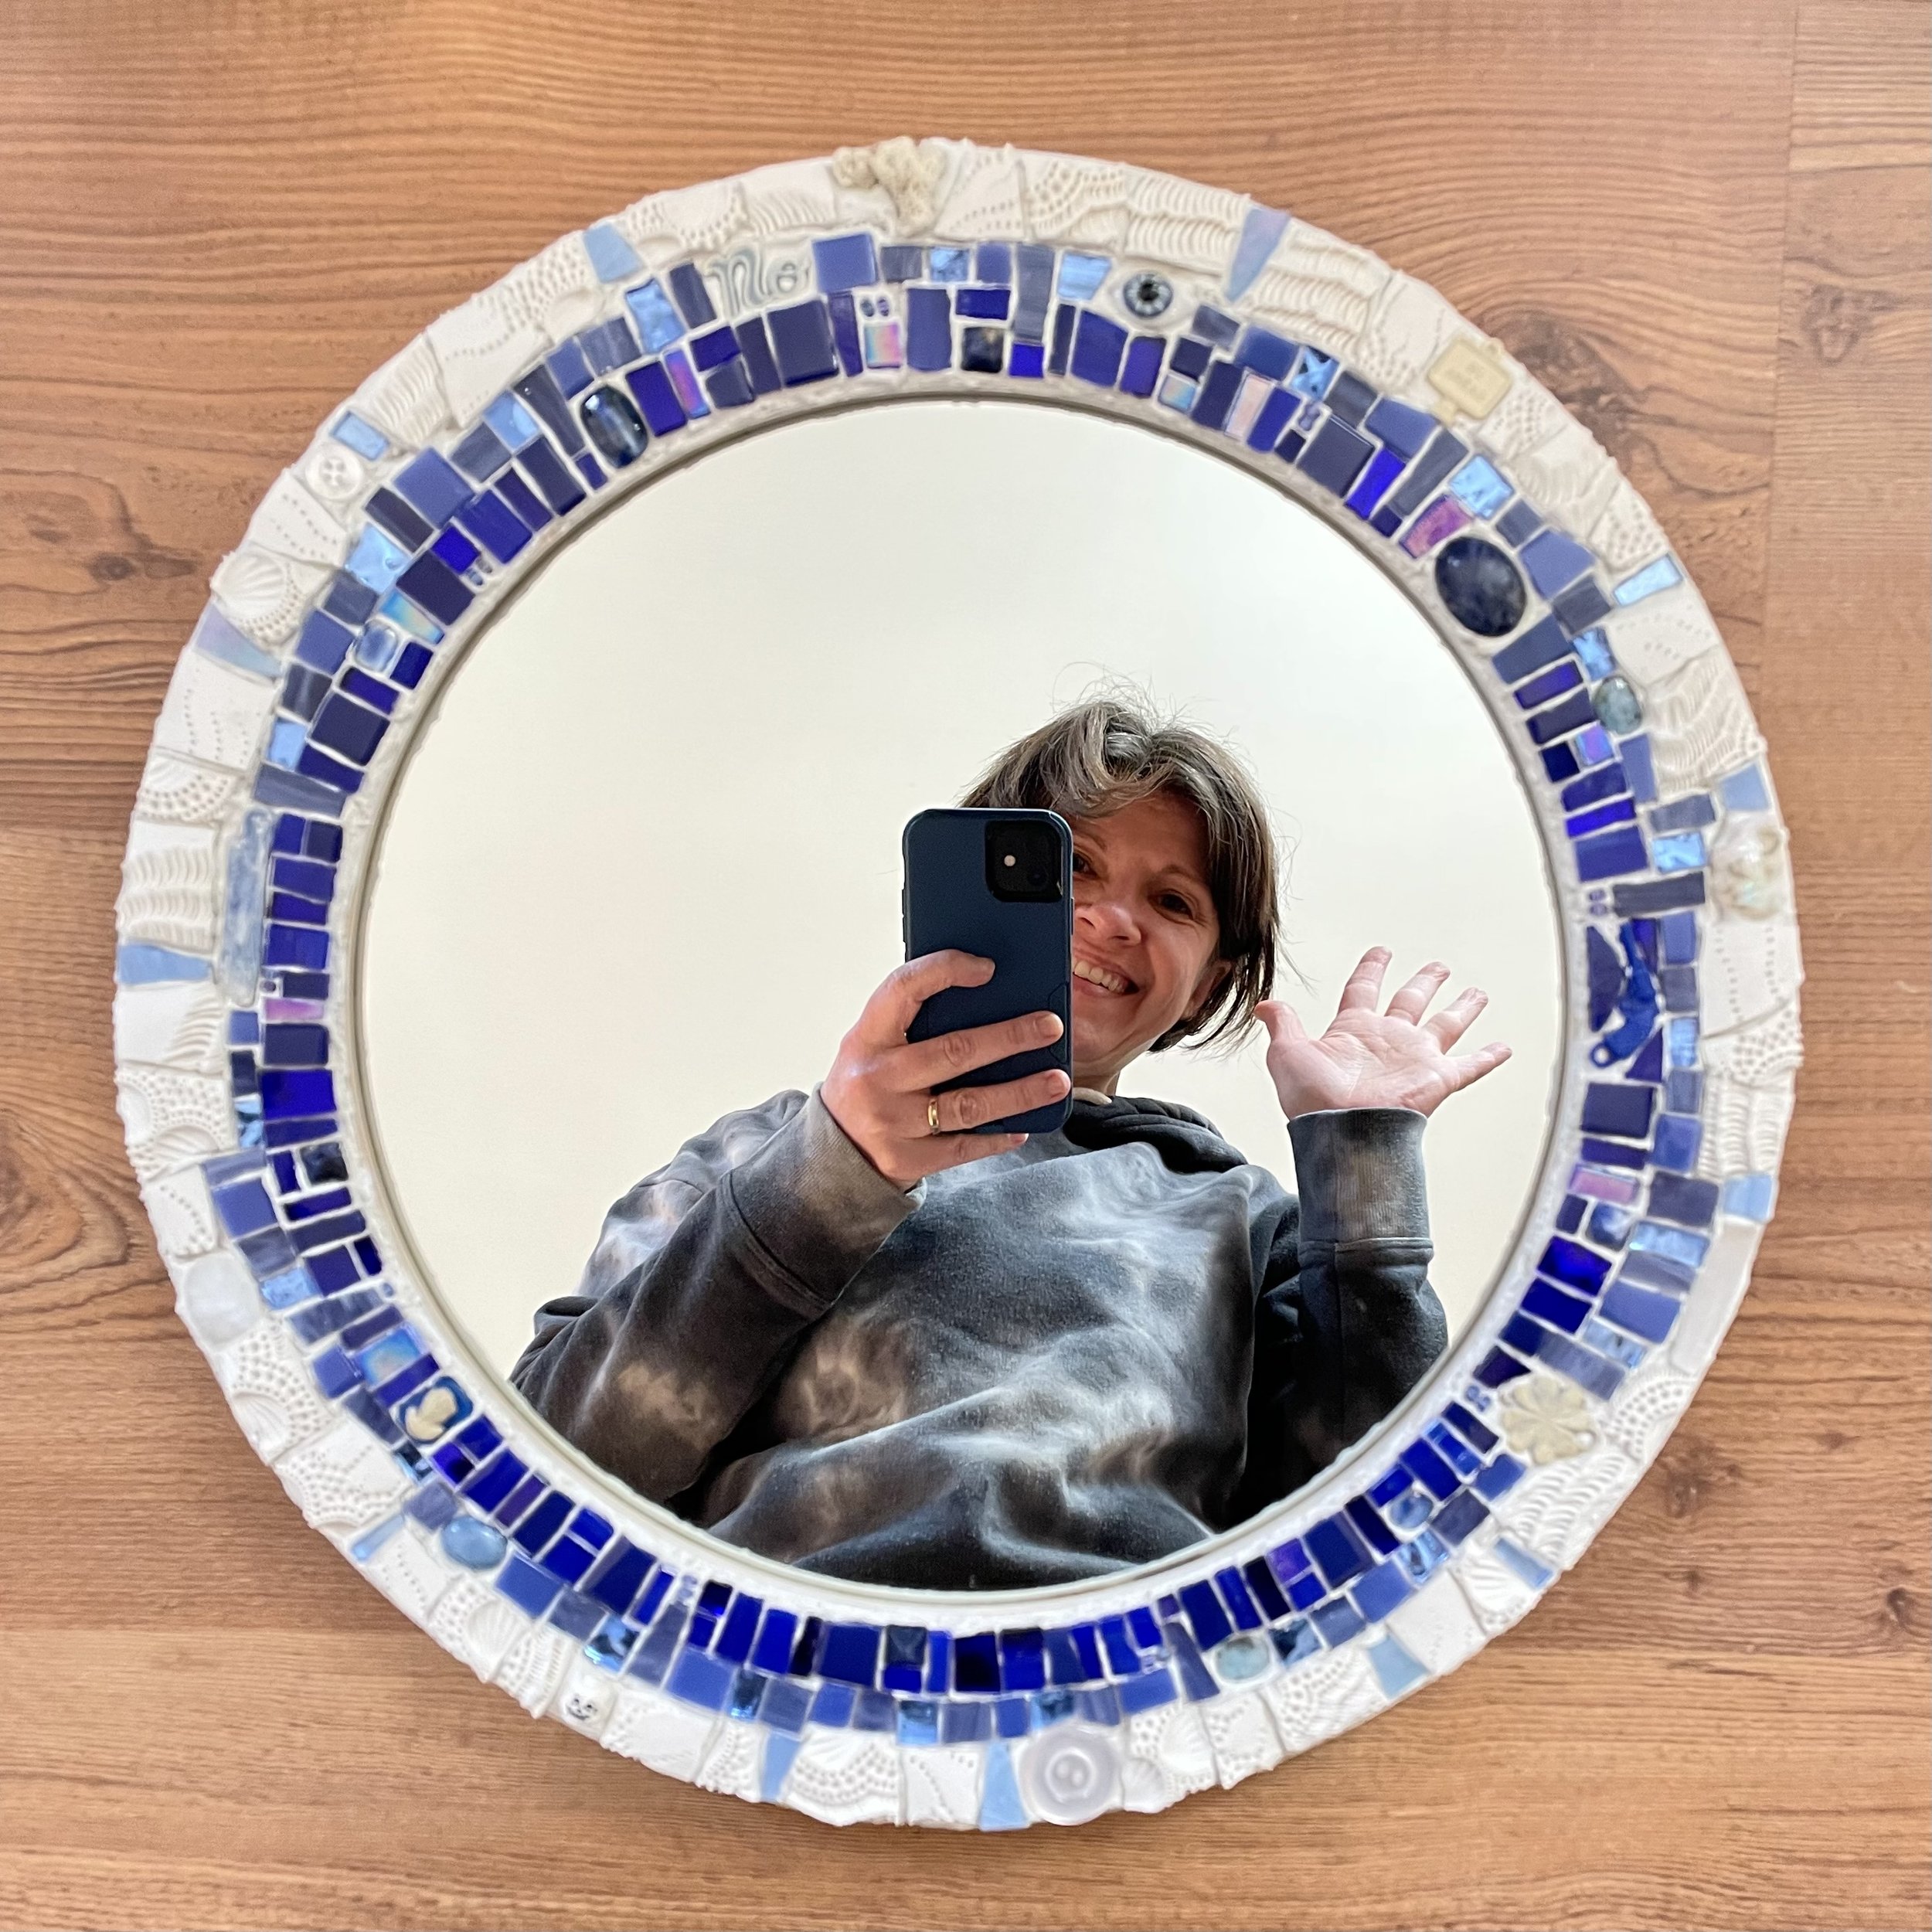 Custom round mosaic mirror with the artist